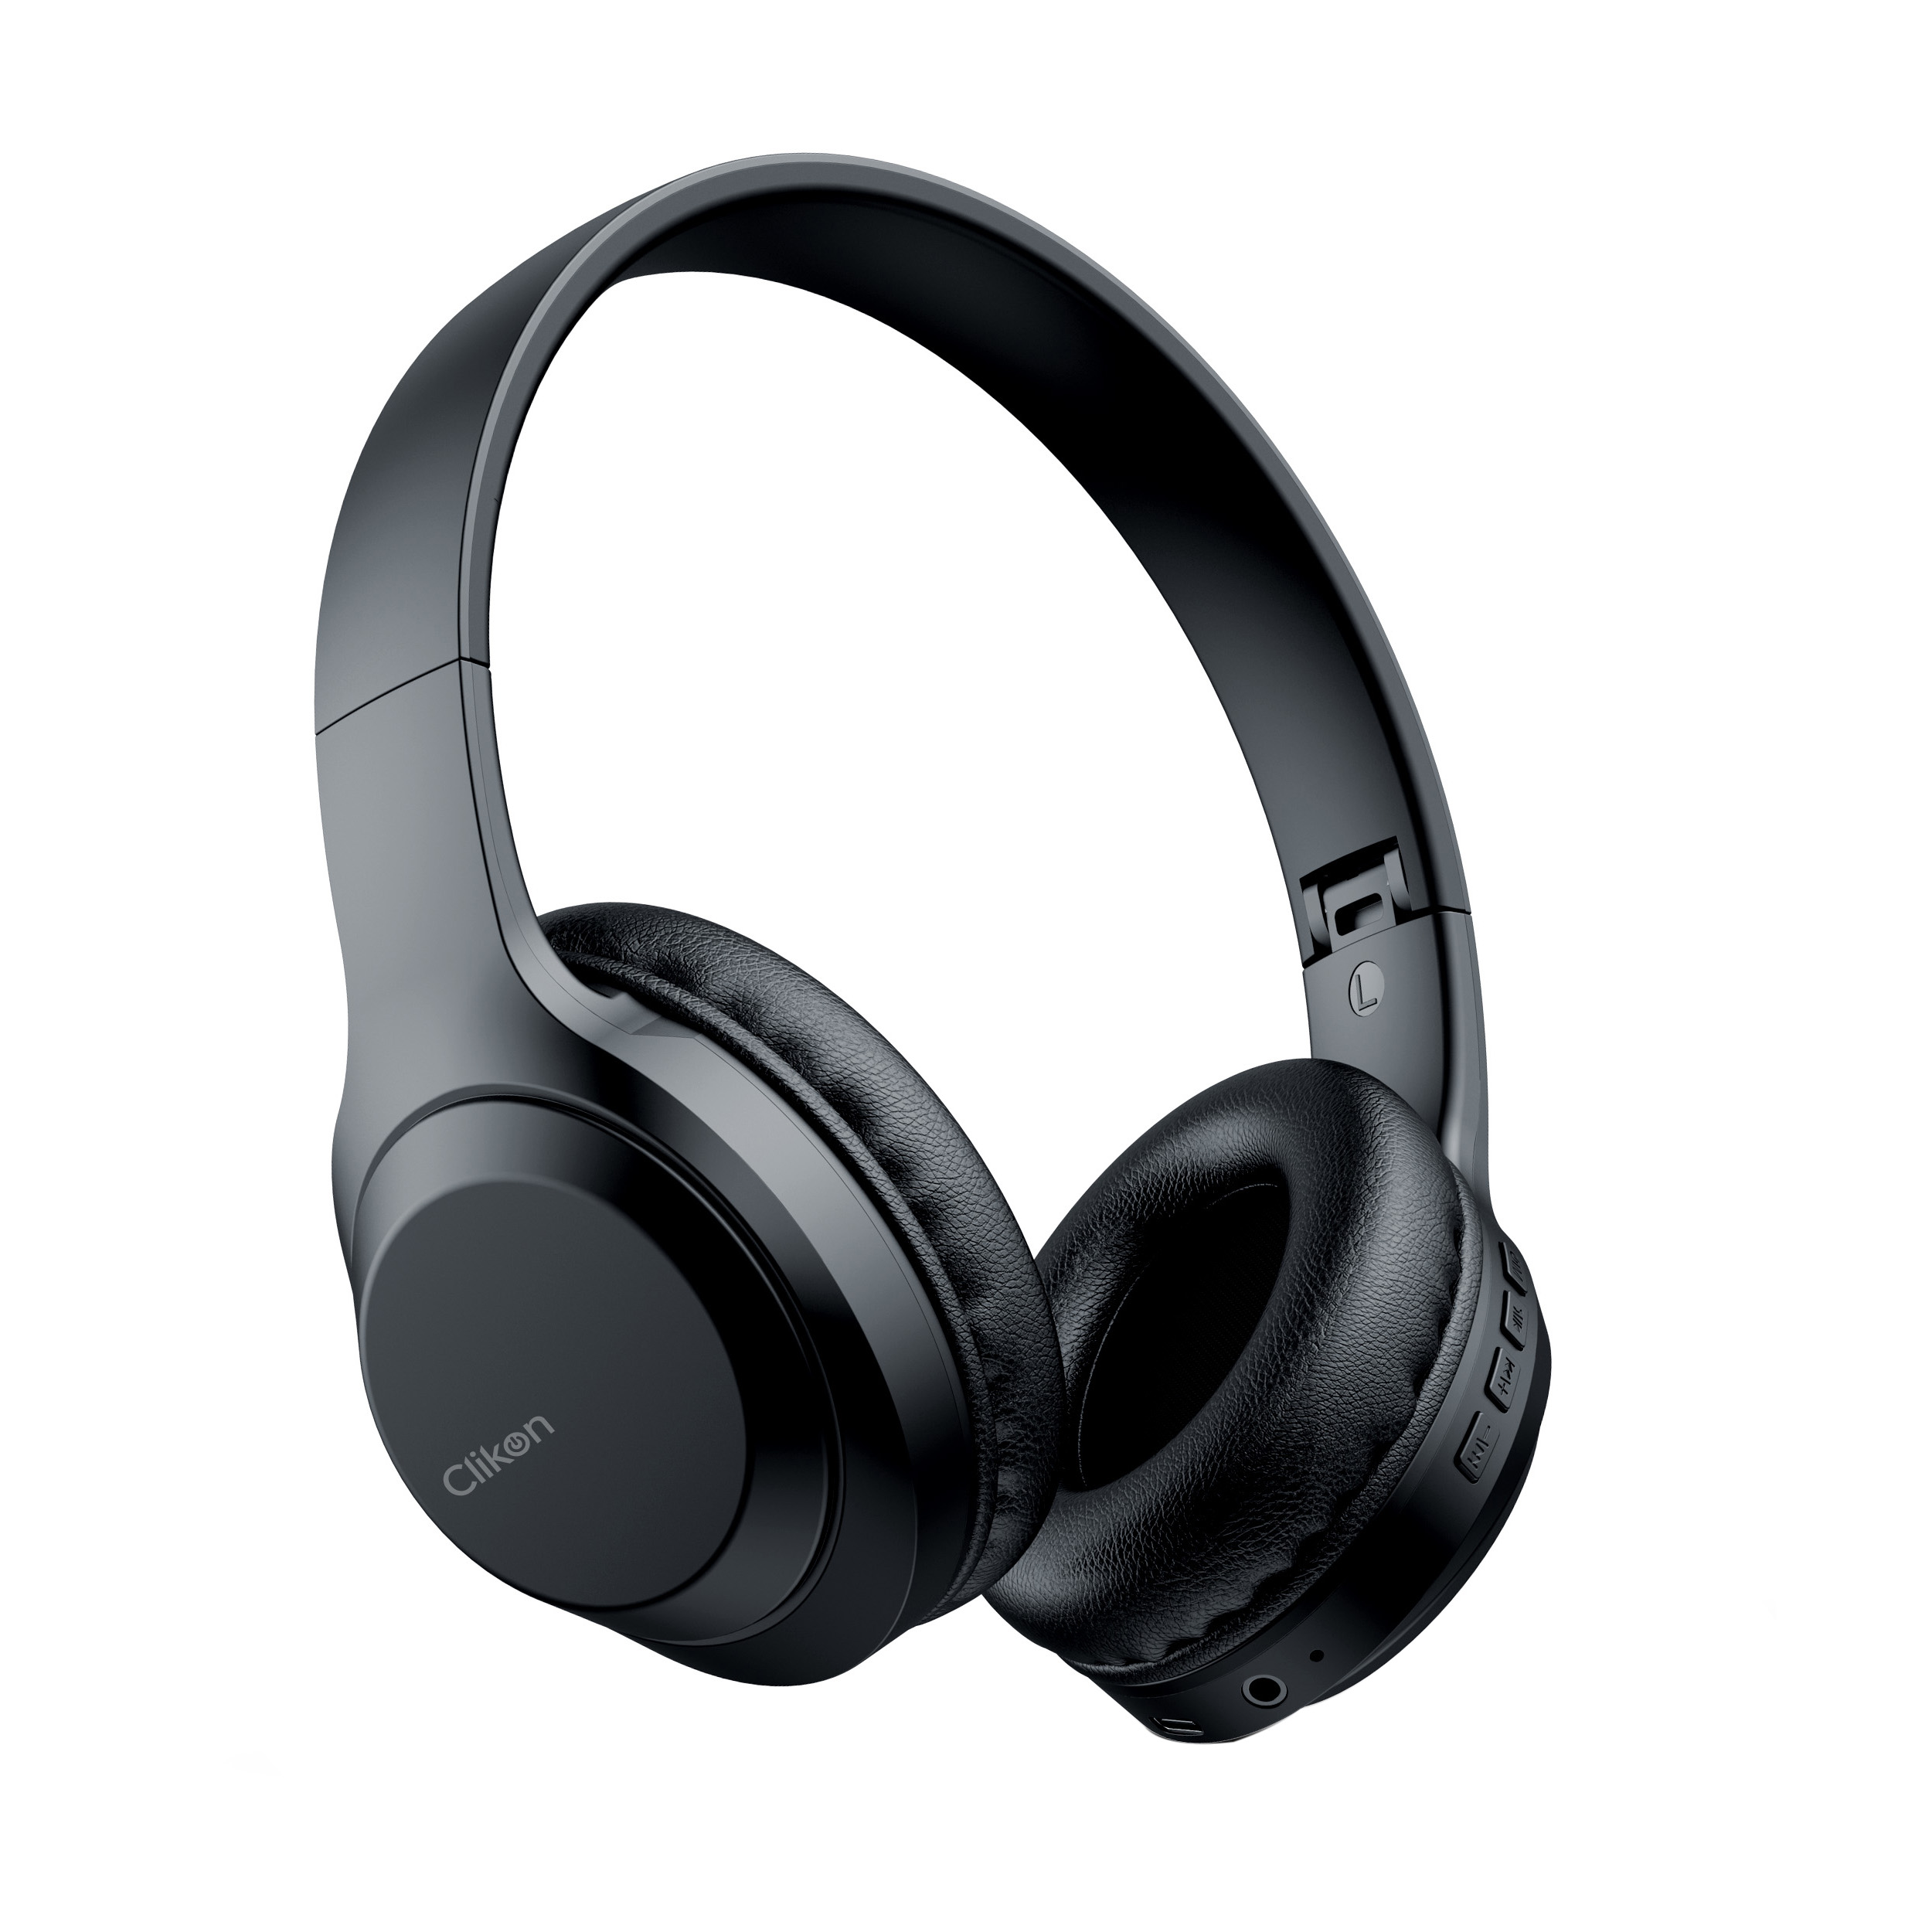 Clikon Wireless Foldable Headphones-Procs01 - Ck861